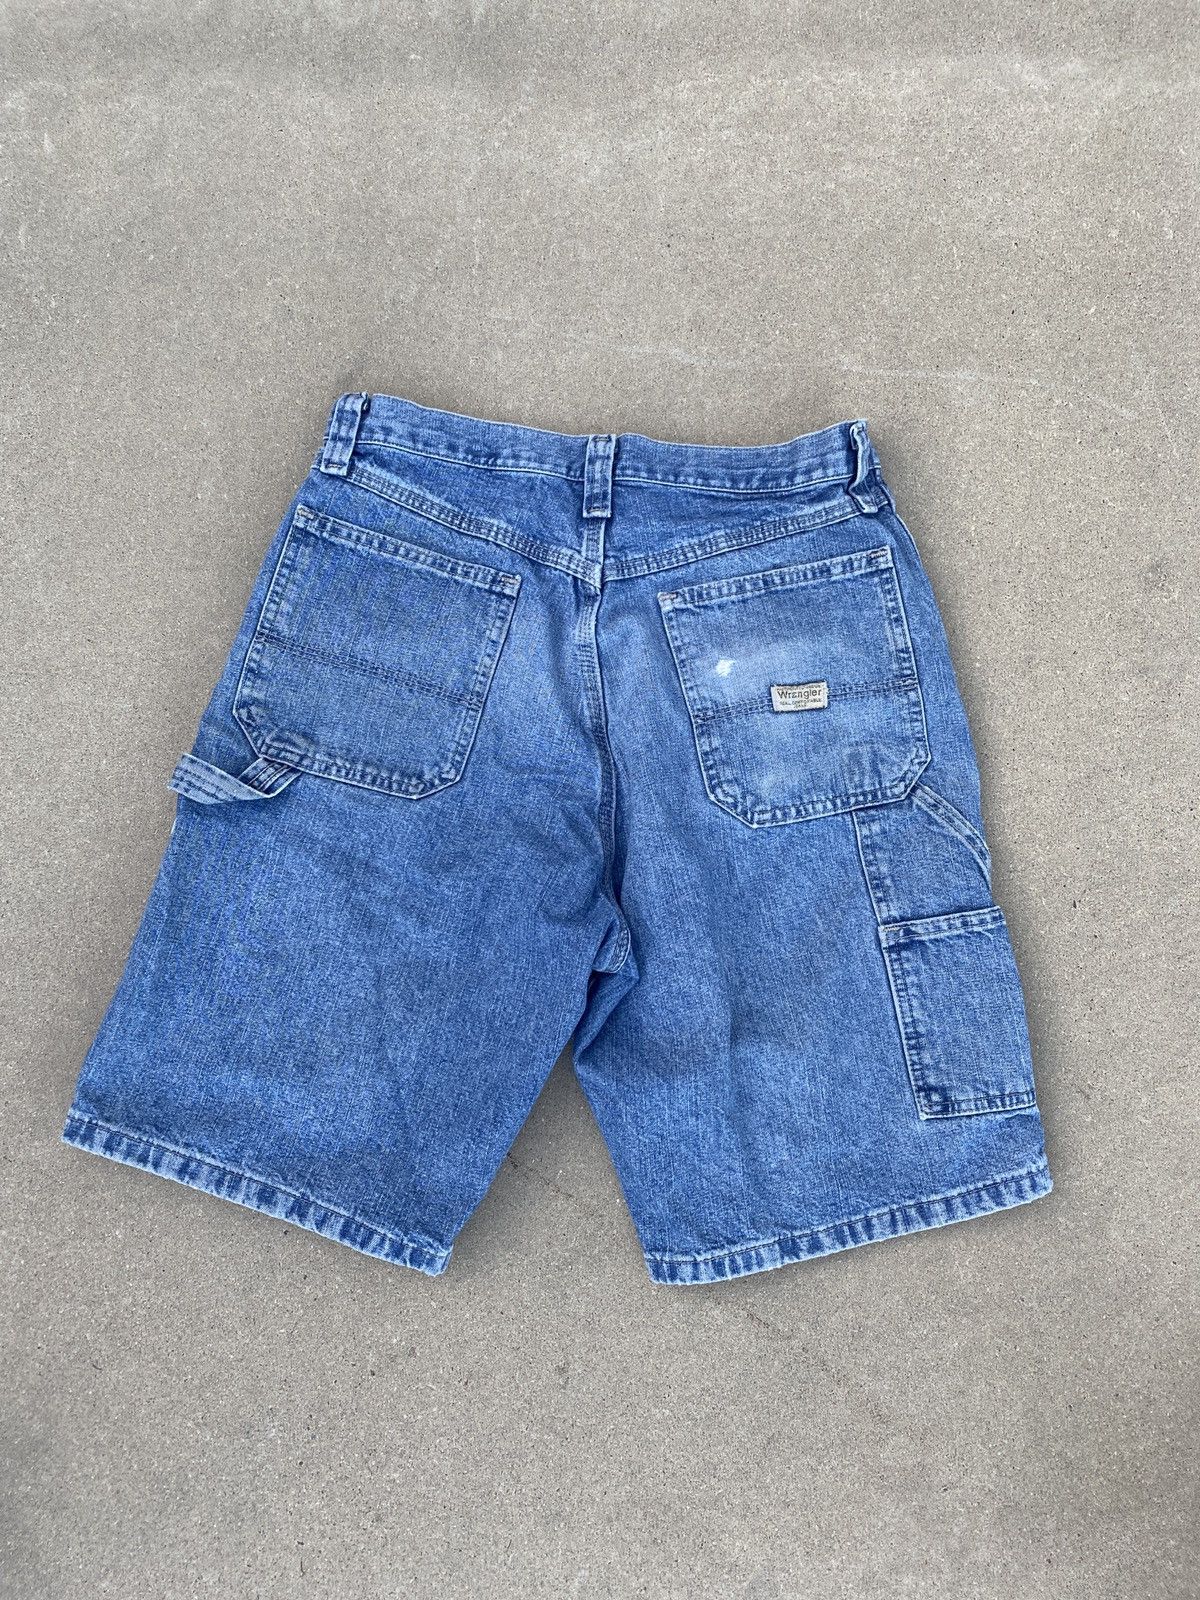 Vintage Wrangler Jorts Jean Shorts Size US 32 / EU 48 - 2 Preview